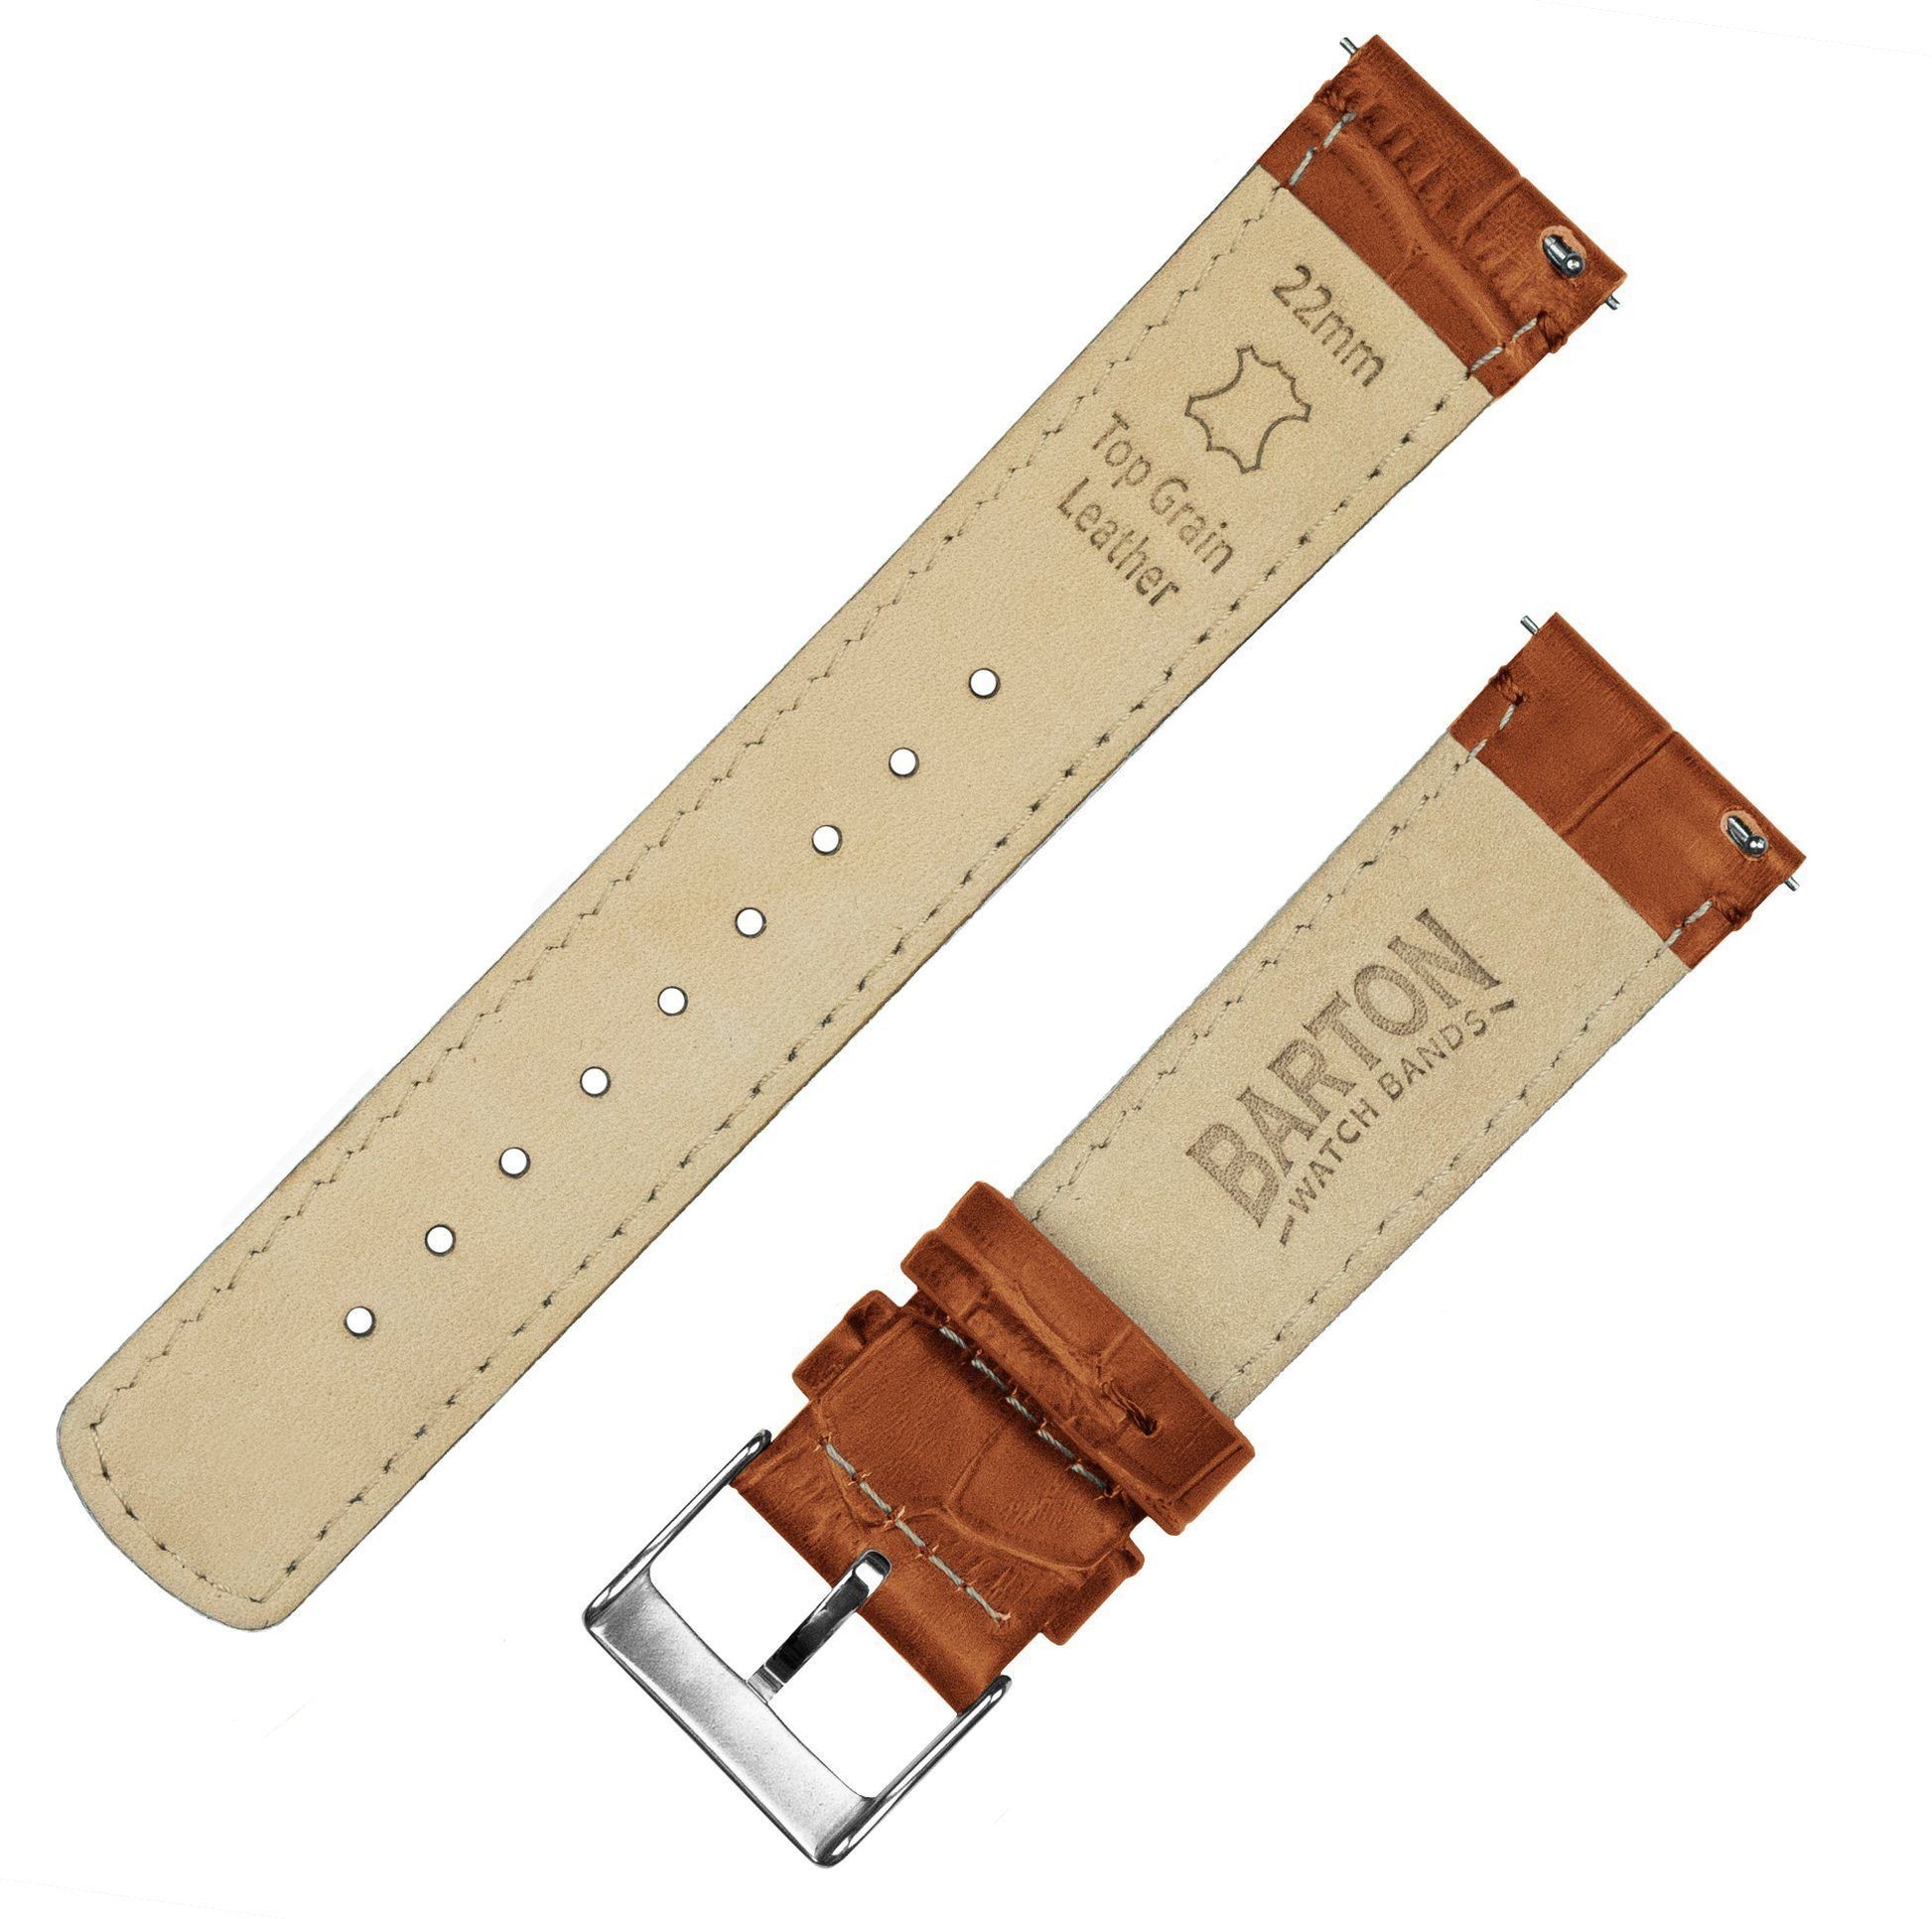 Samsung Galaxy Watch | Toffee Brown Alligator Grain Leather - Barton Watch Bands